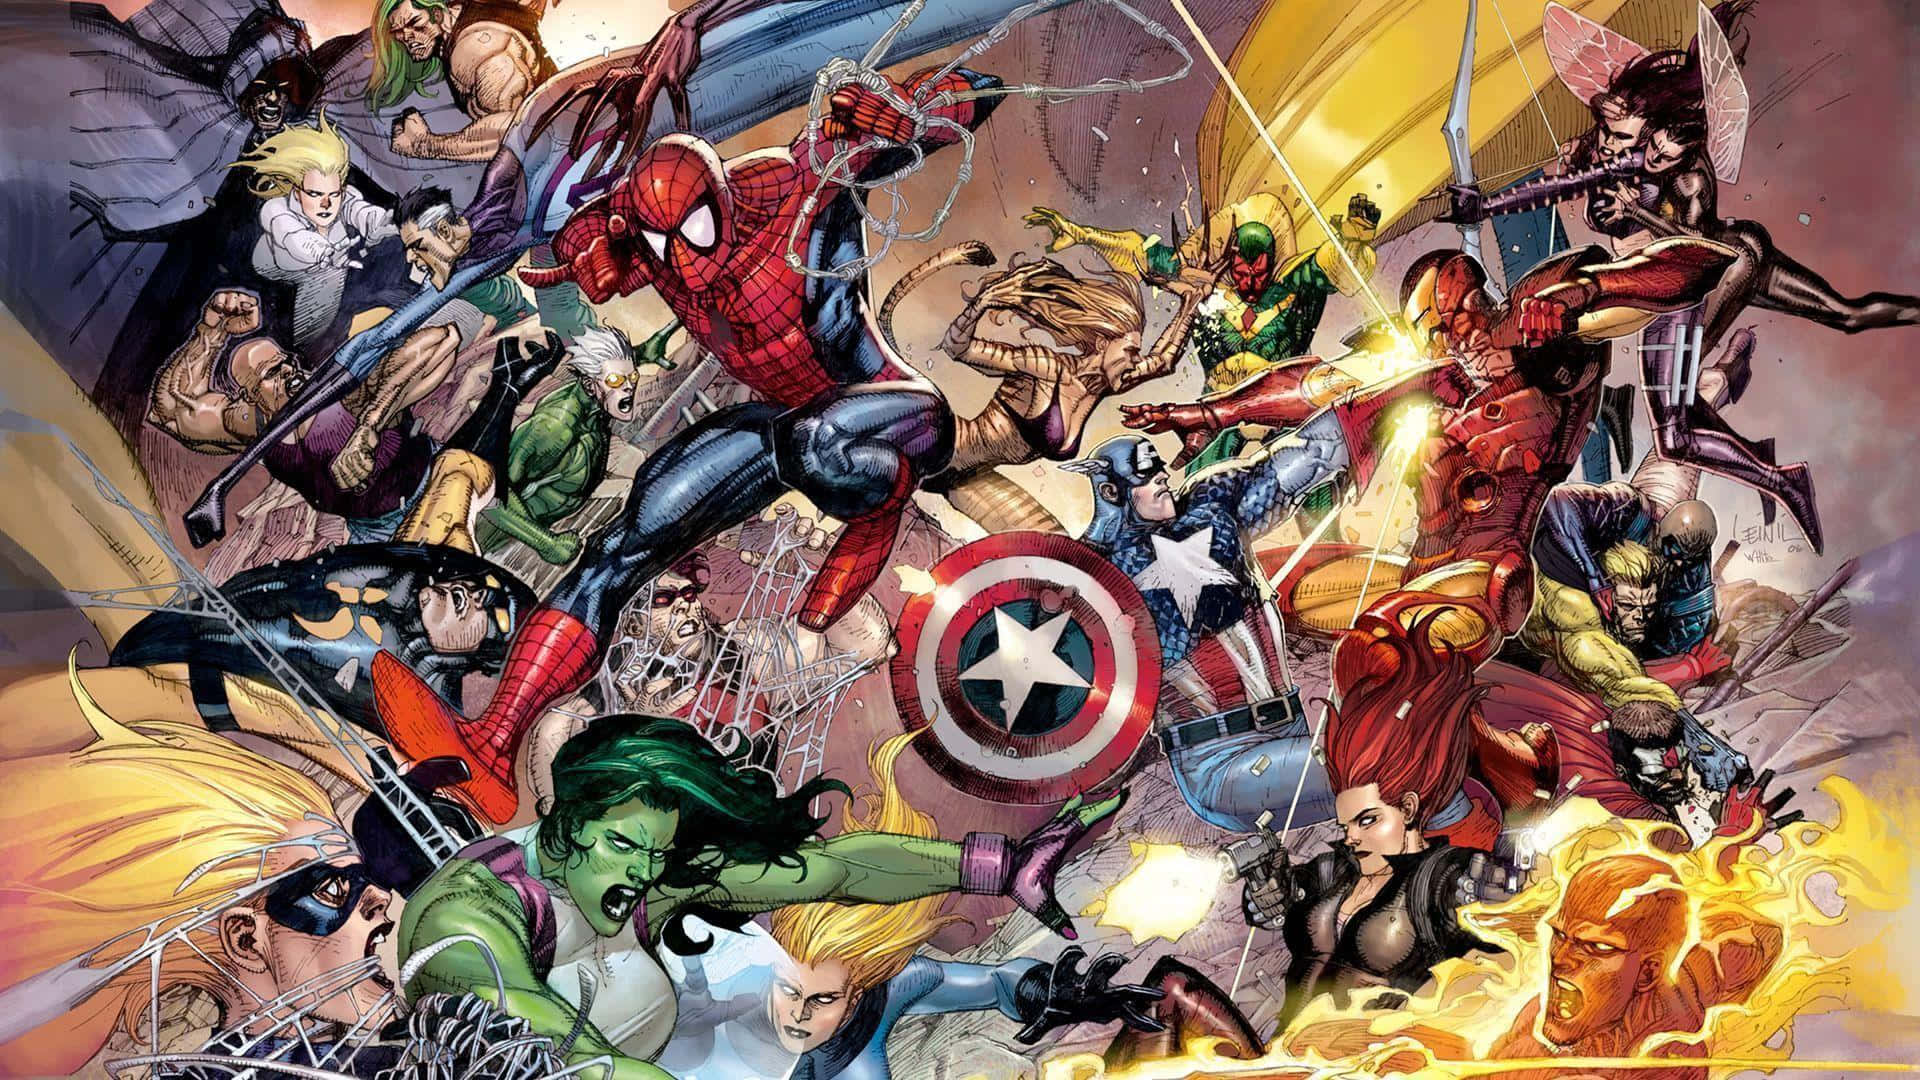 Face-Off Between Marvel&DC's Superheroes